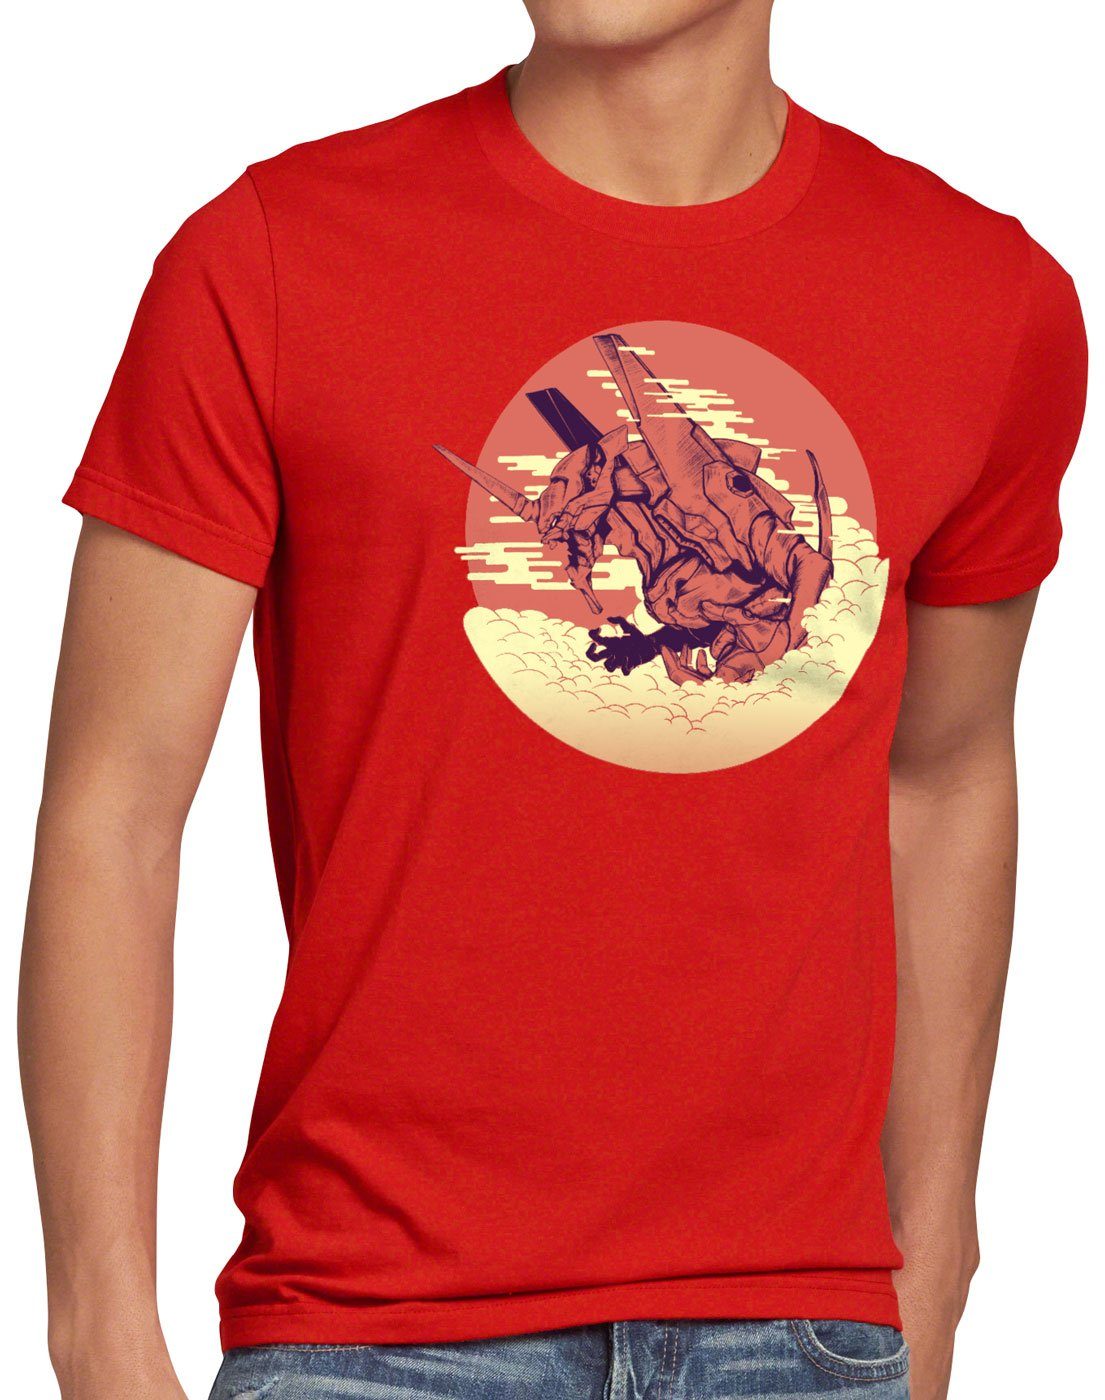 Morgen Herren Print-Shirt rot tokyo3 evangelion style3 neo T-Shirt Mecha